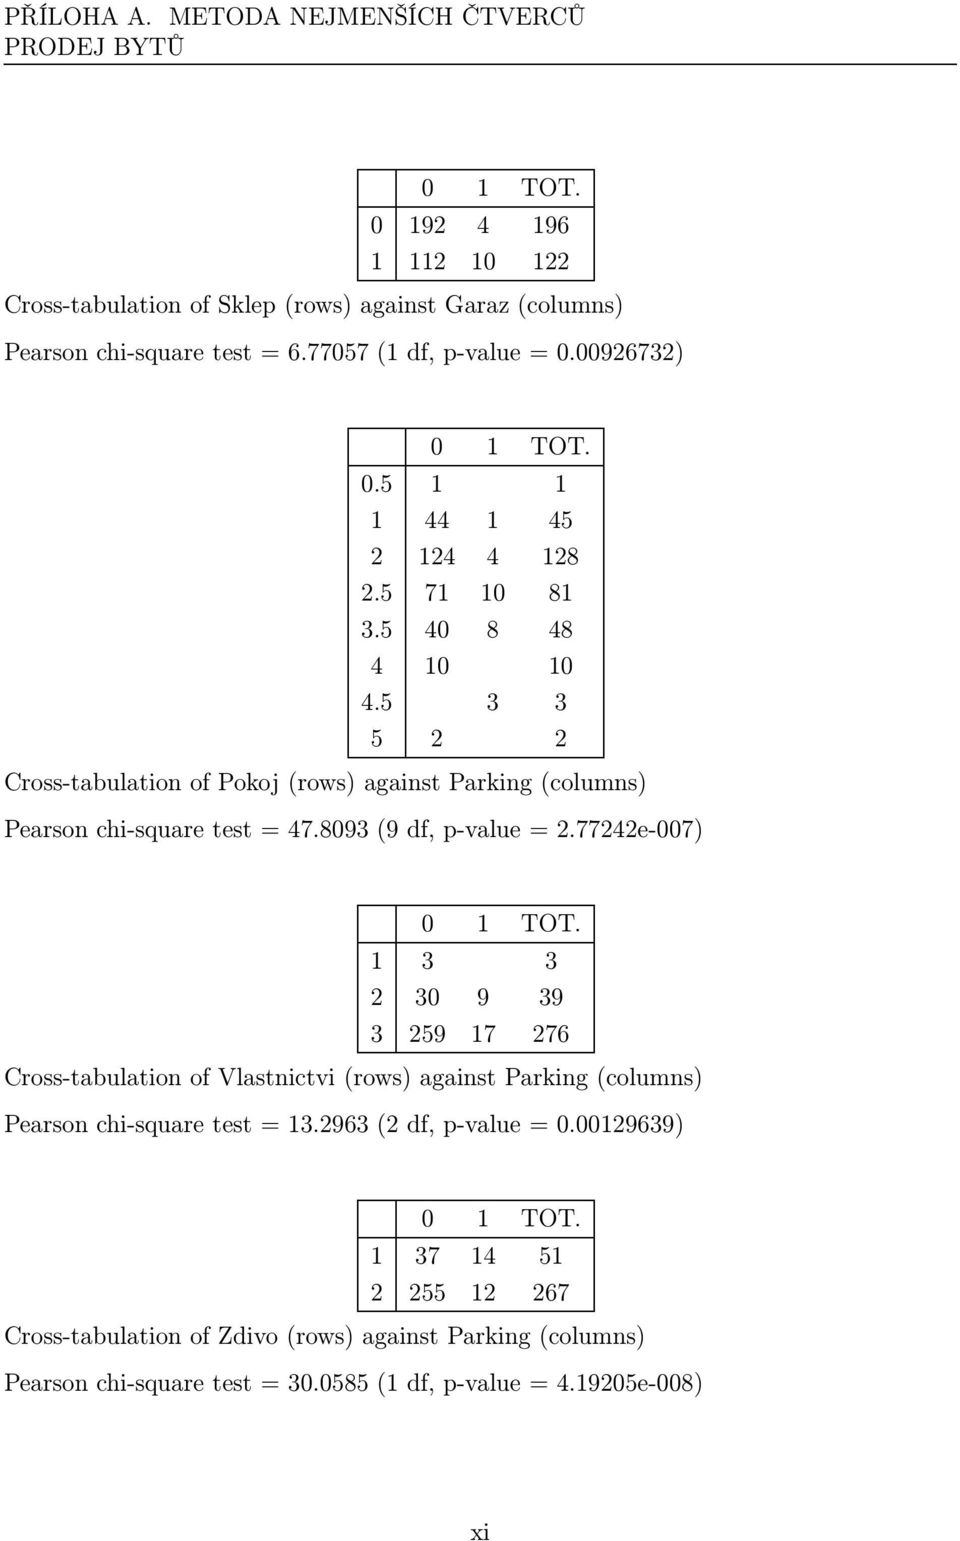 5 3 3 5 2 2 Cross-tabulation of Pokoj(rows) against Parking(columns) Pearson chi-square test = 47.8093(9 df, p-value = 2.